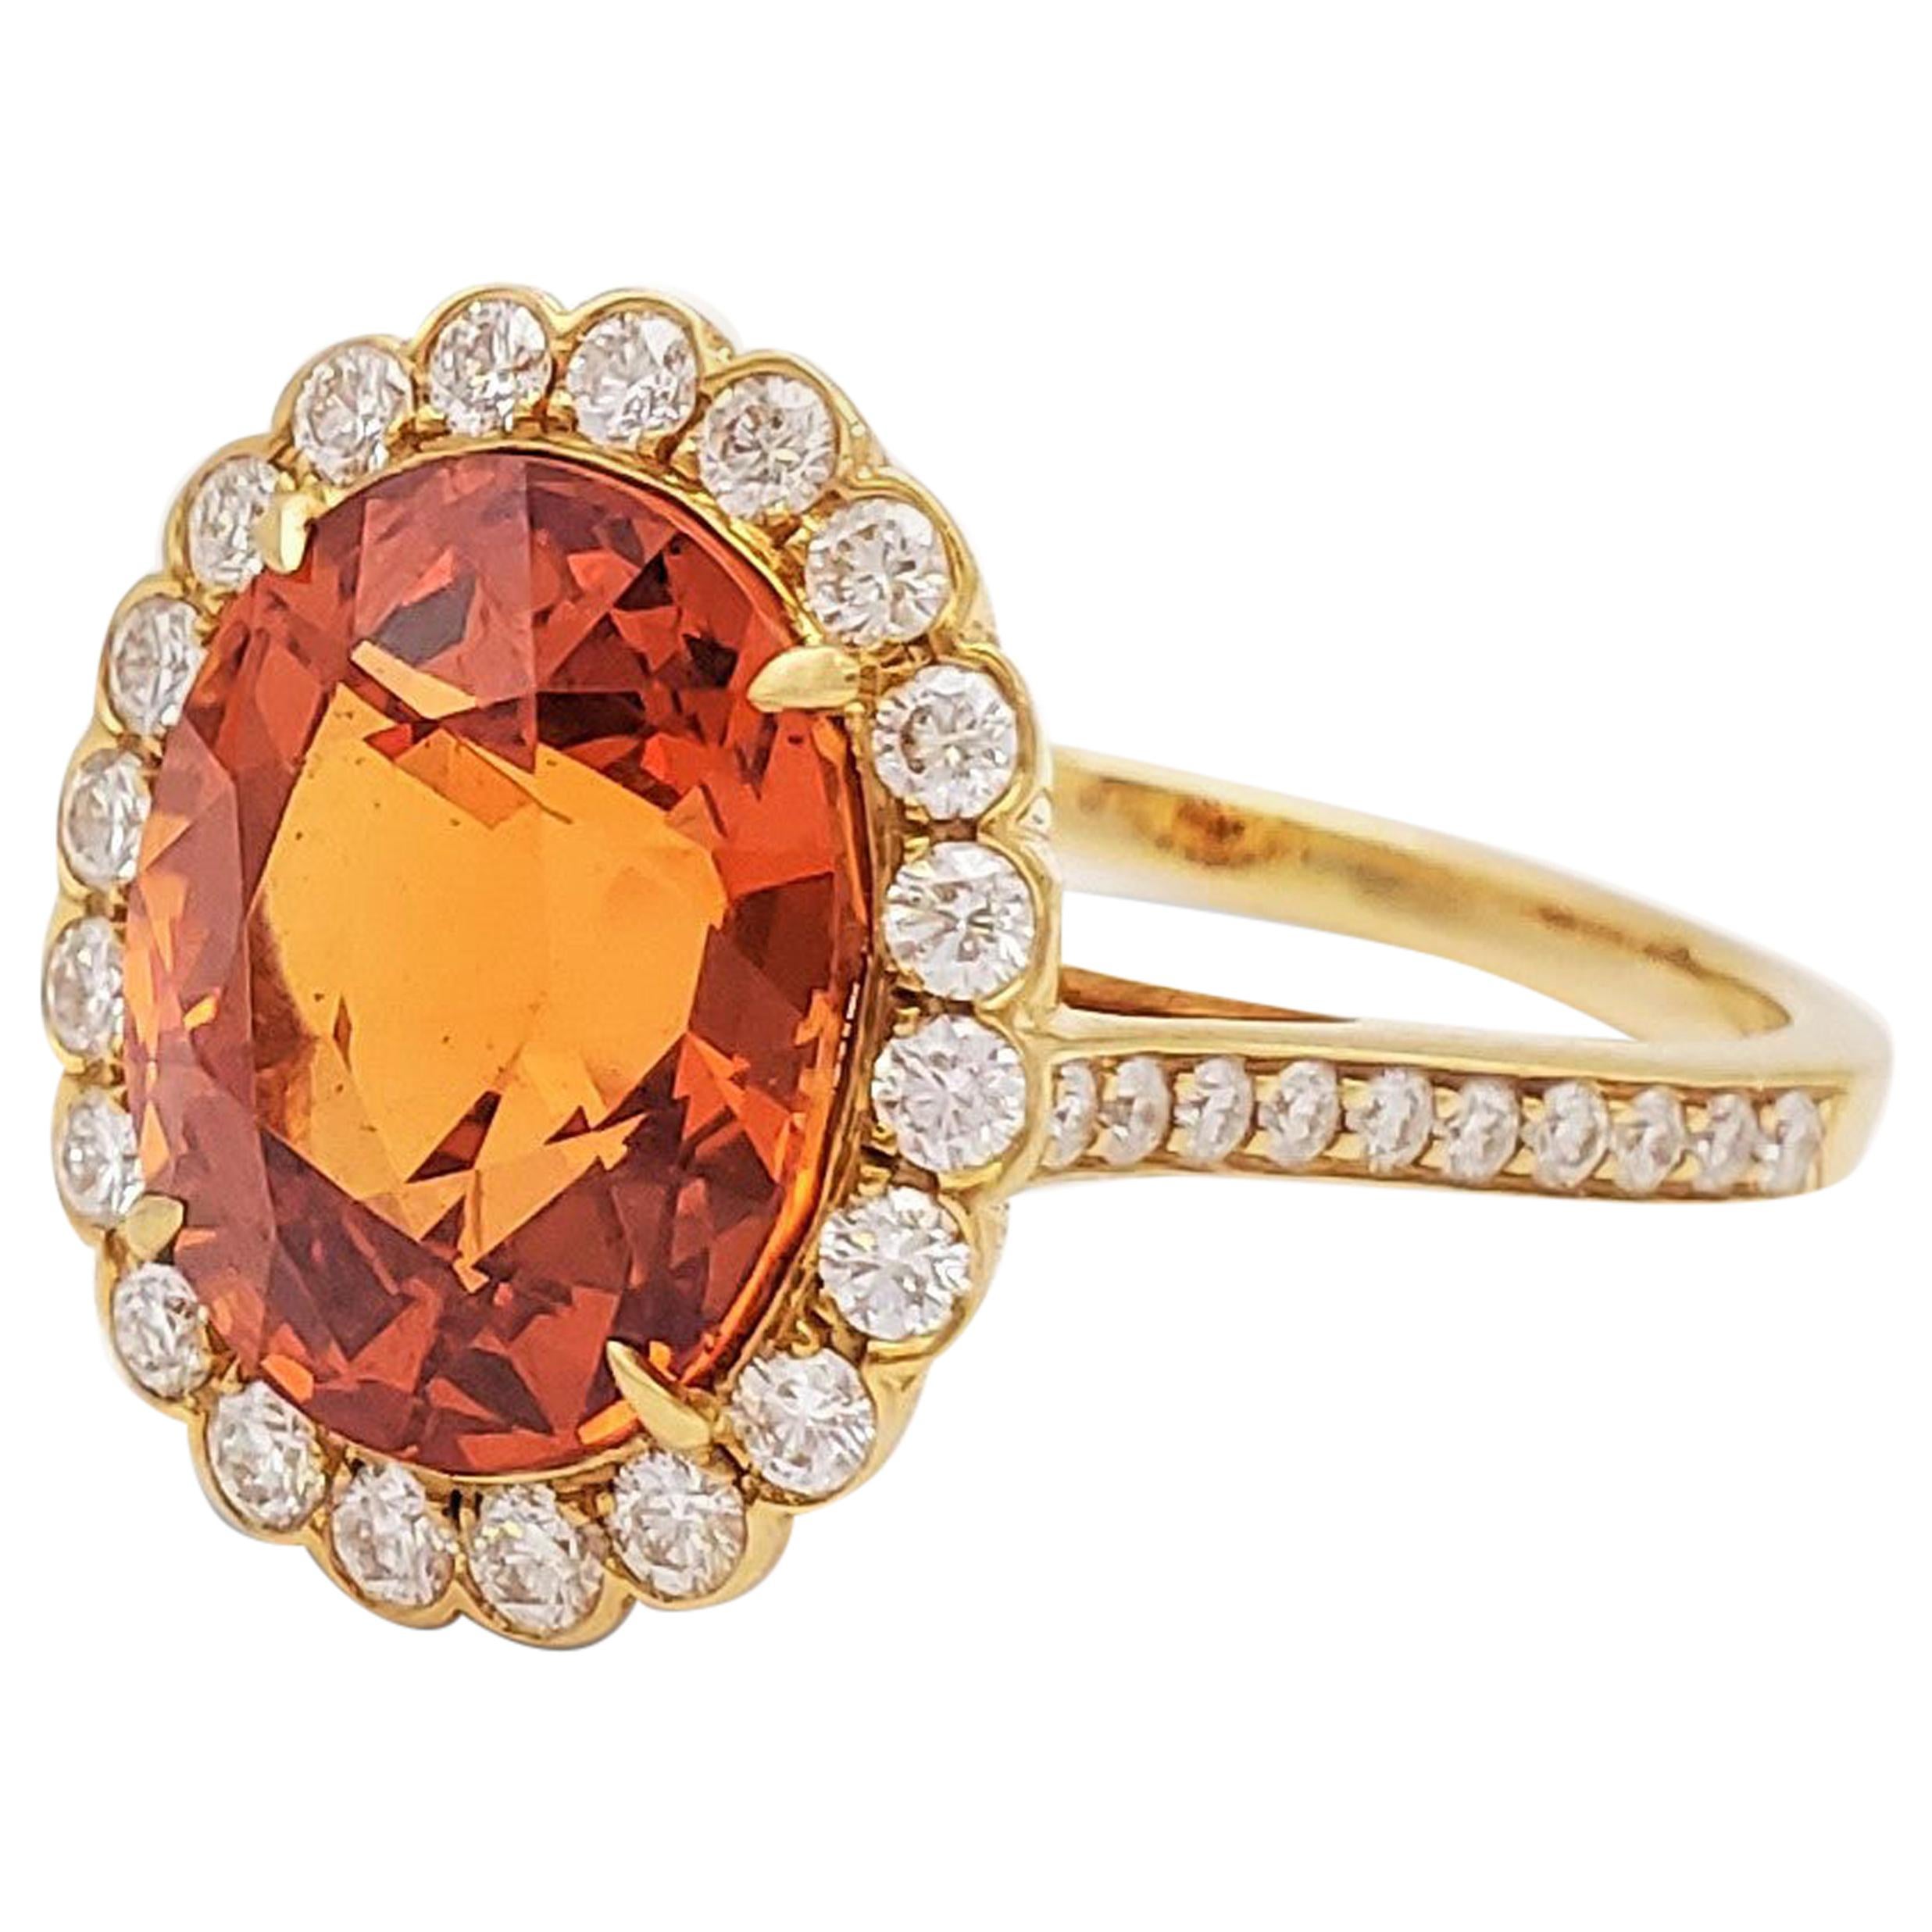 Tiffany & Co. Spessartite Garnet and Diamond Ring